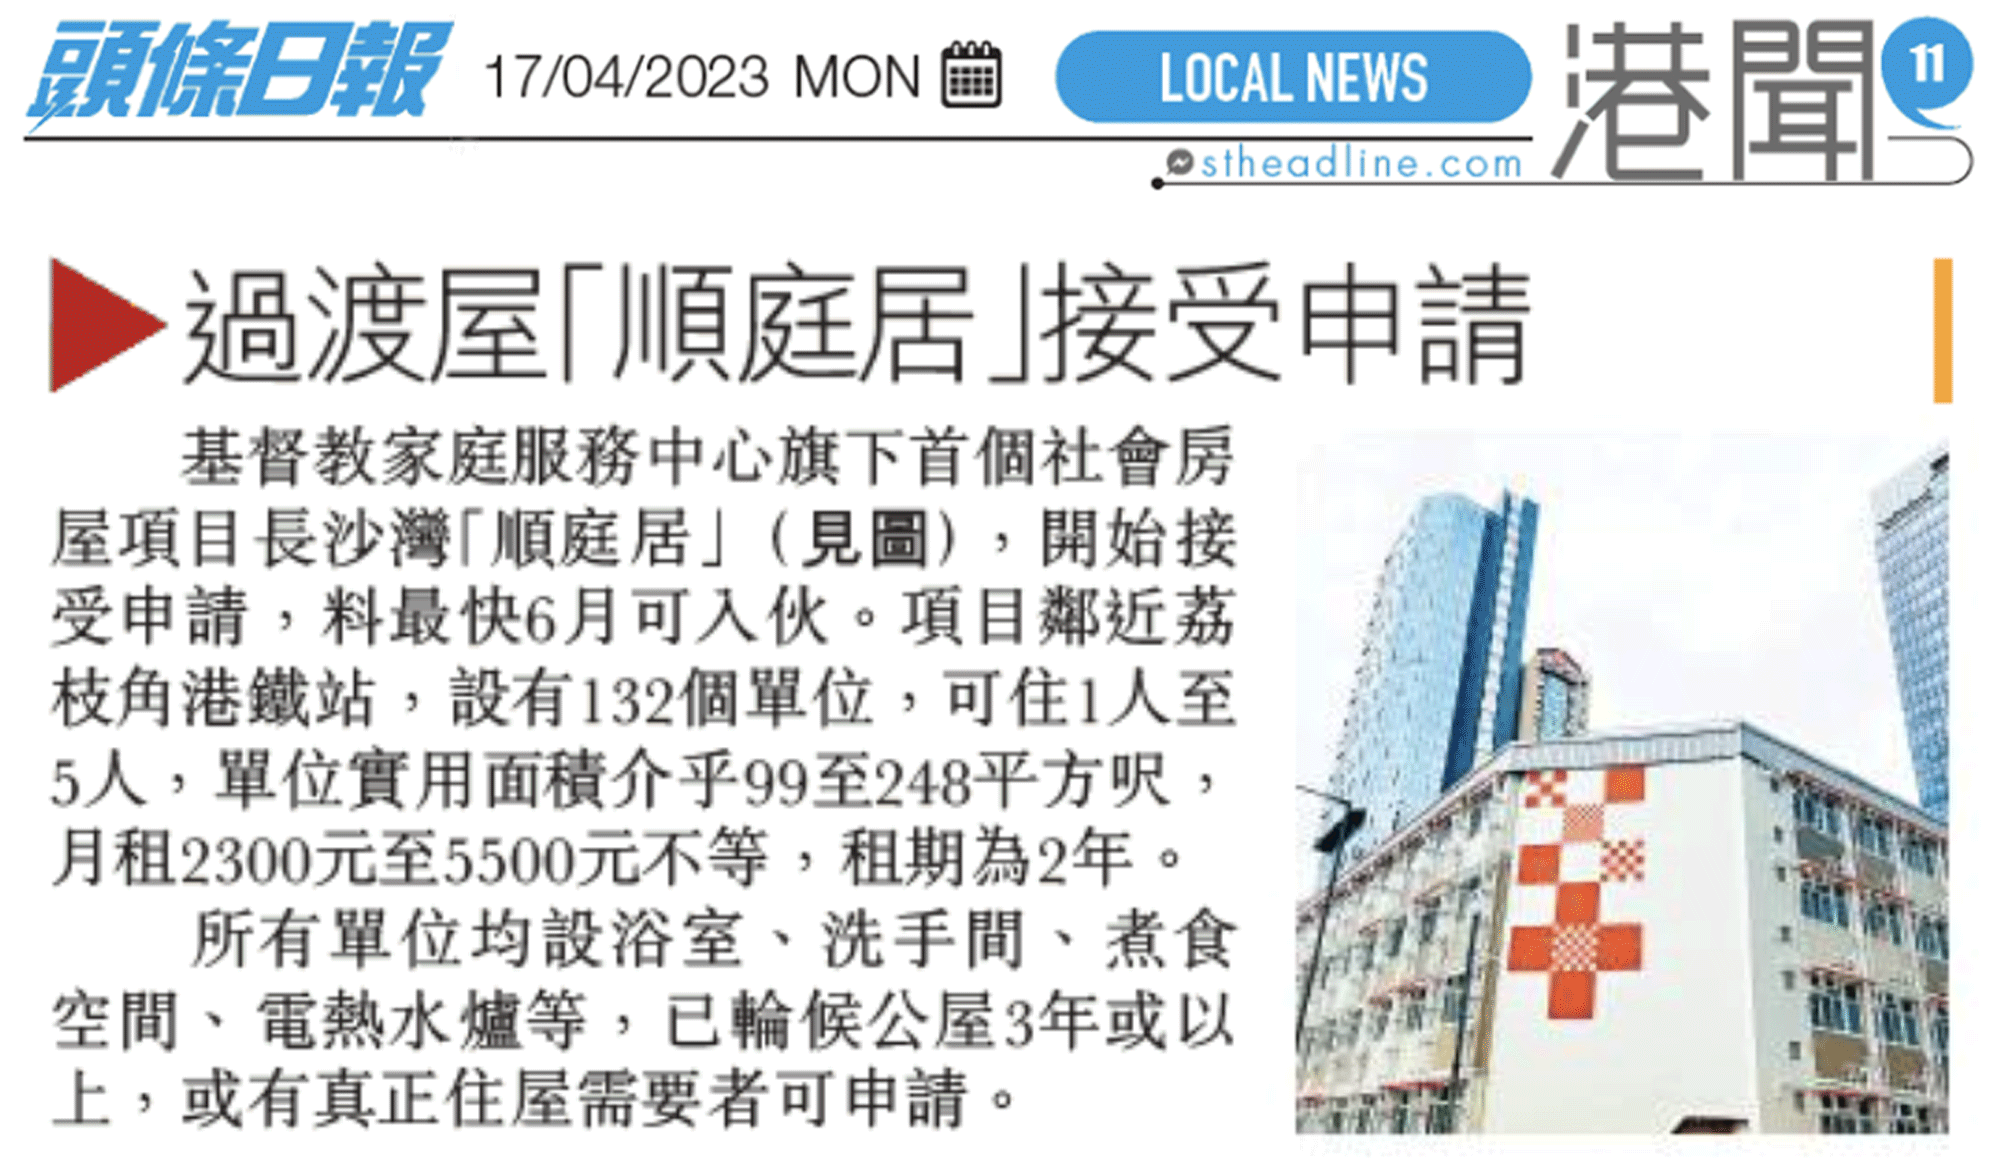 Cover Image - Headline Daily - Social Housing Project - Cheung Sha Wan “Shun Ting Terraced Home”